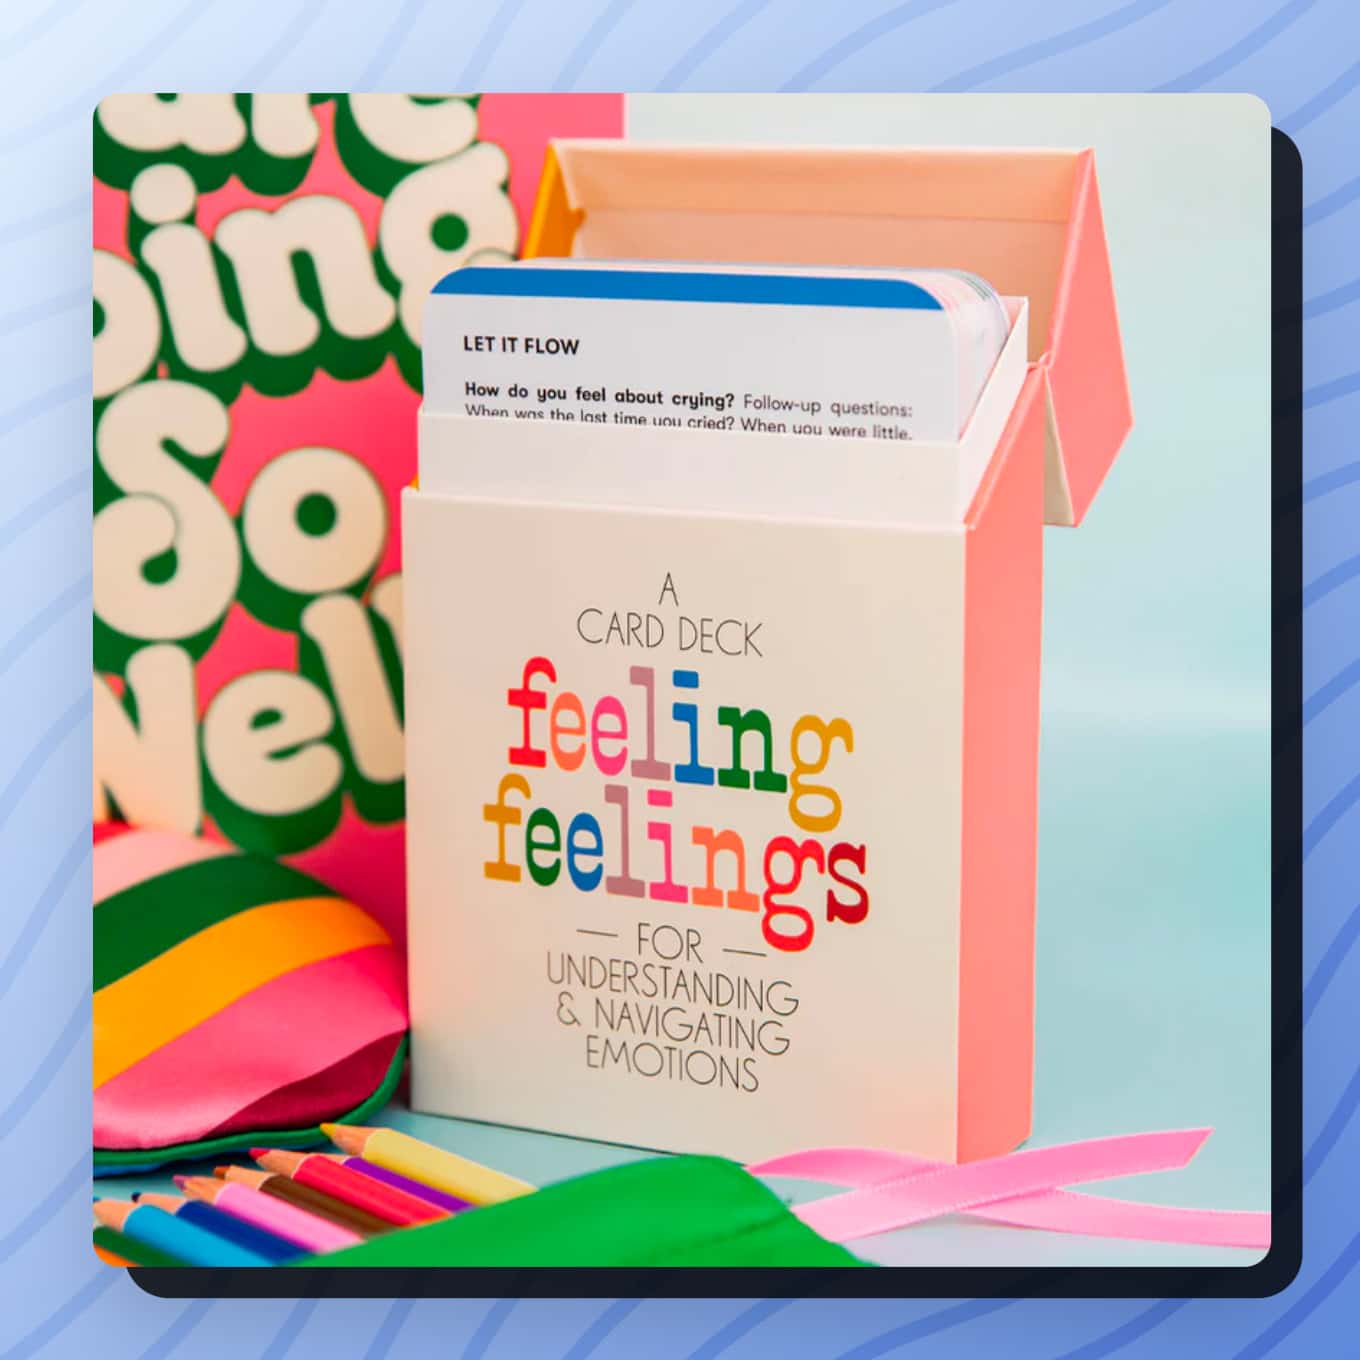 A card deck for Feeling Feelings for understanding & navigating emotions